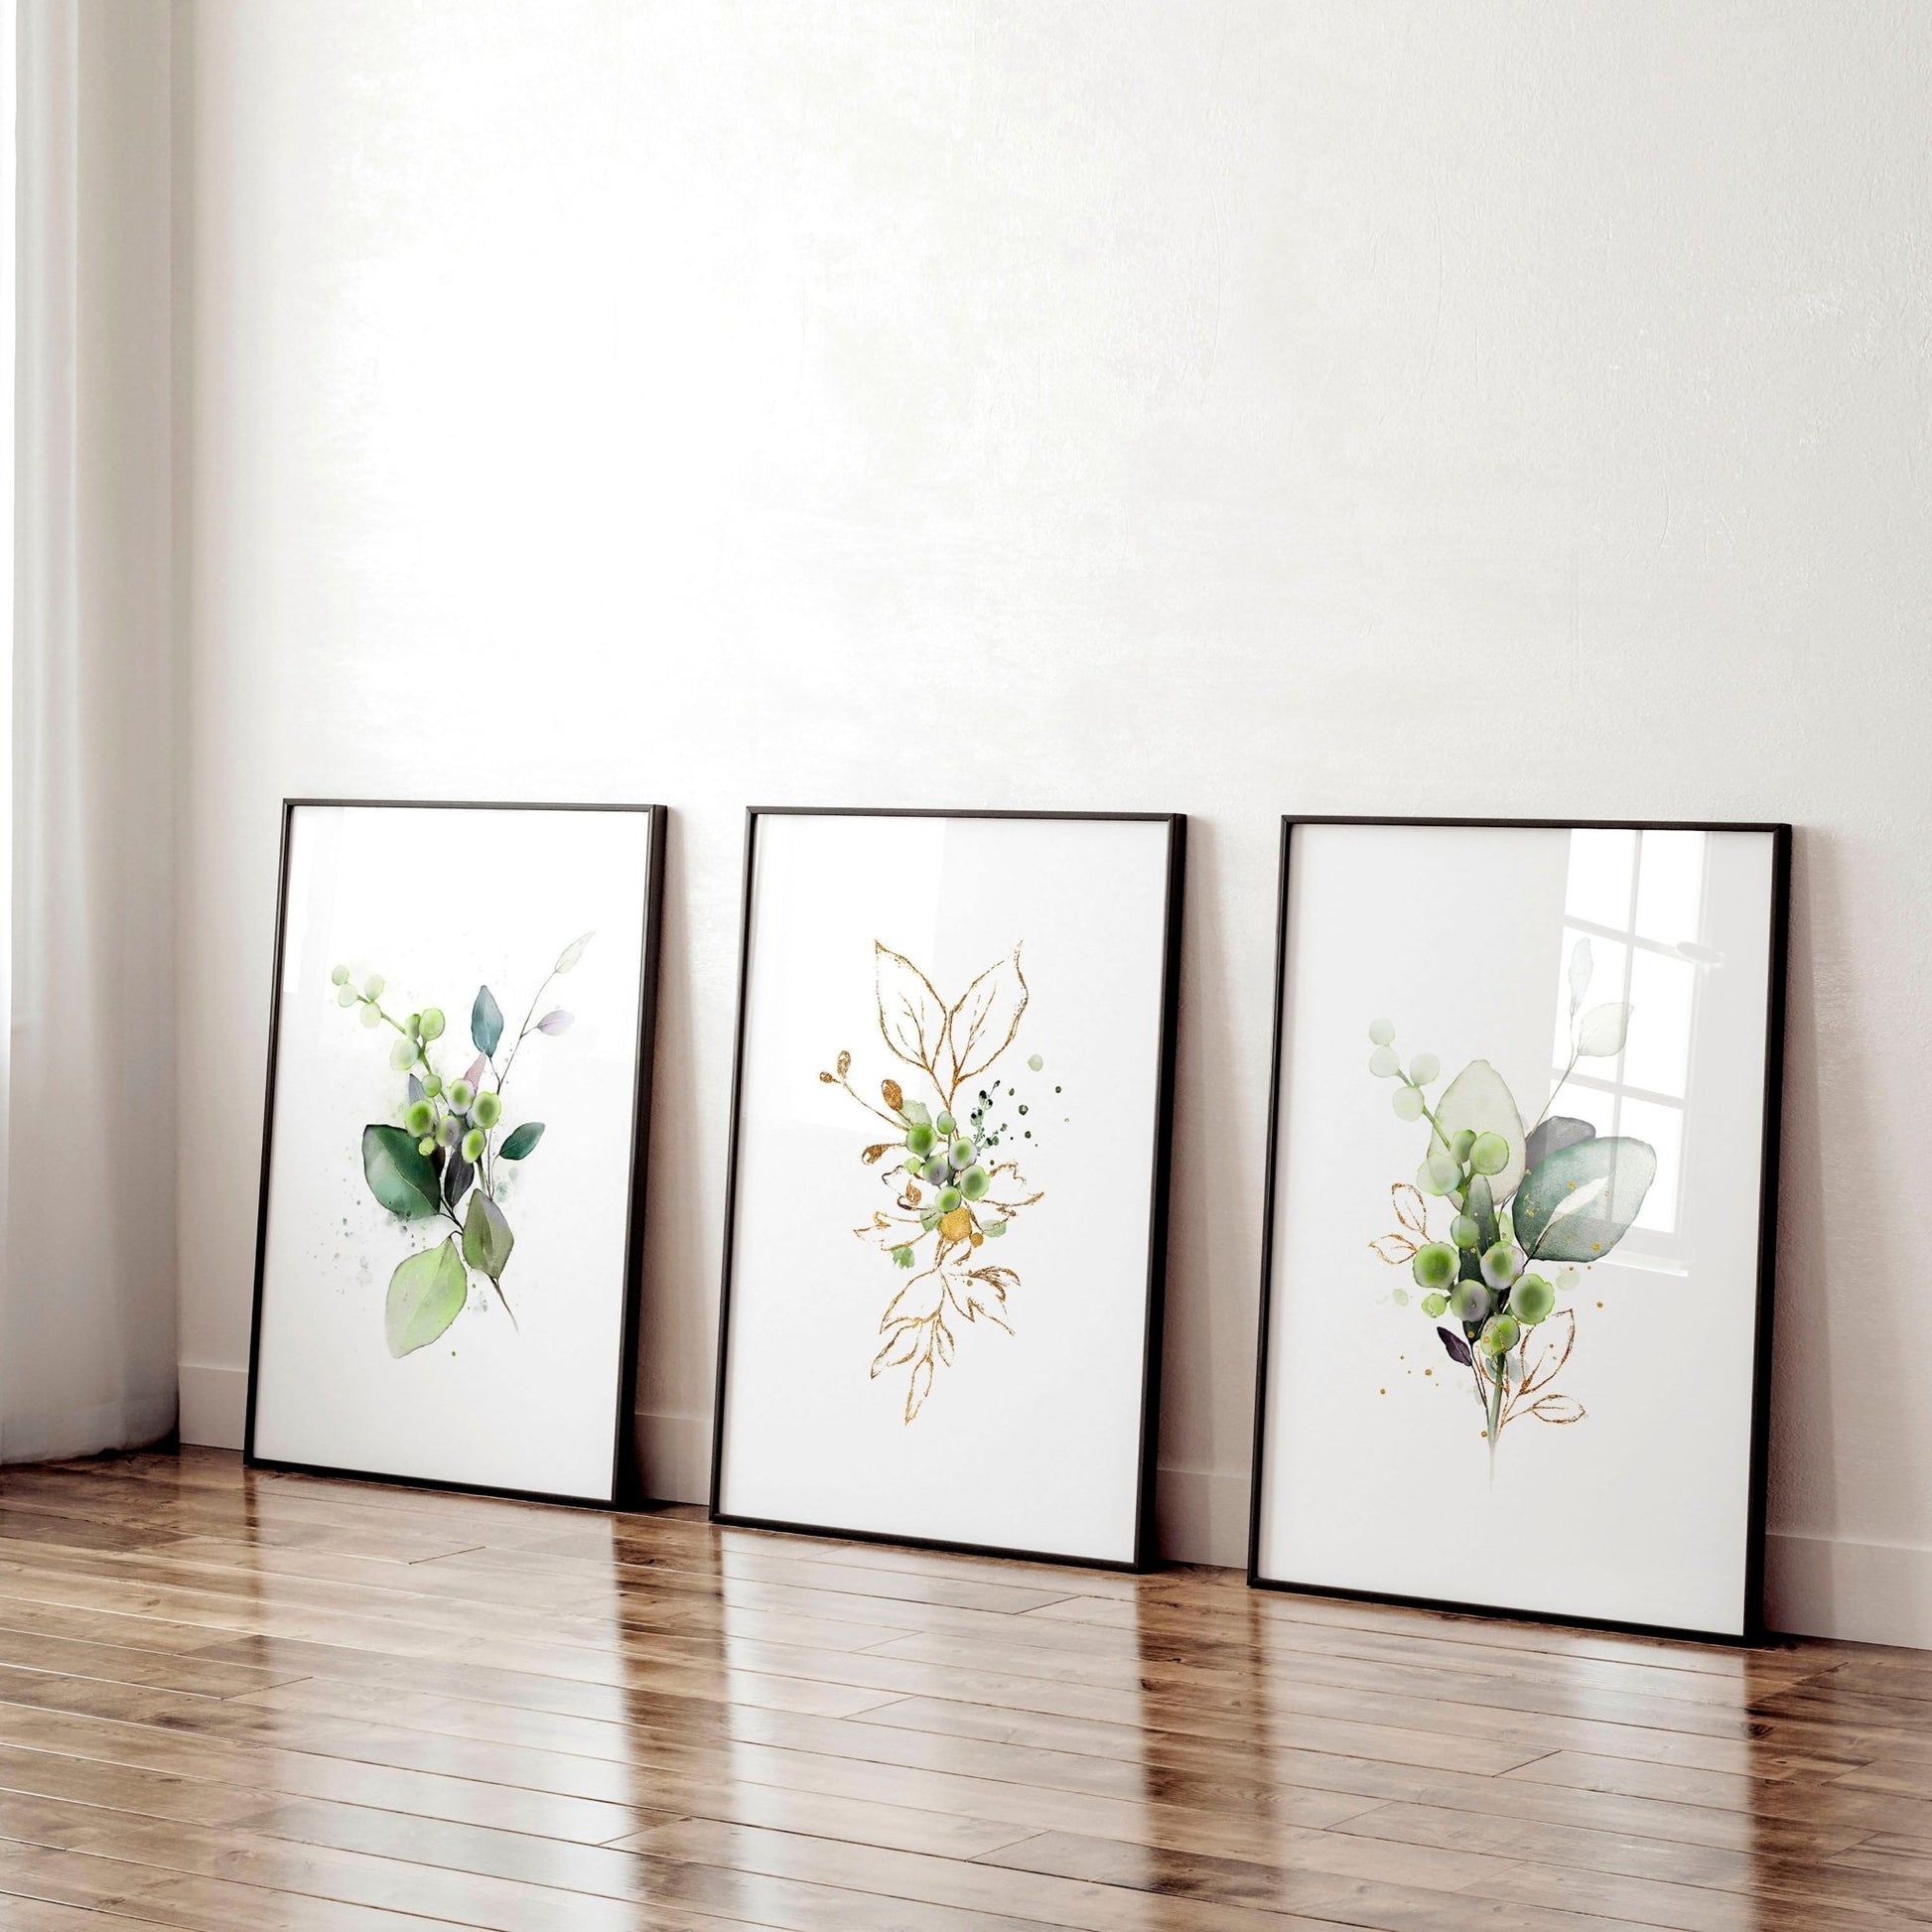 Professional office decor ideas | set of 3 wall art prints - About Wall Art